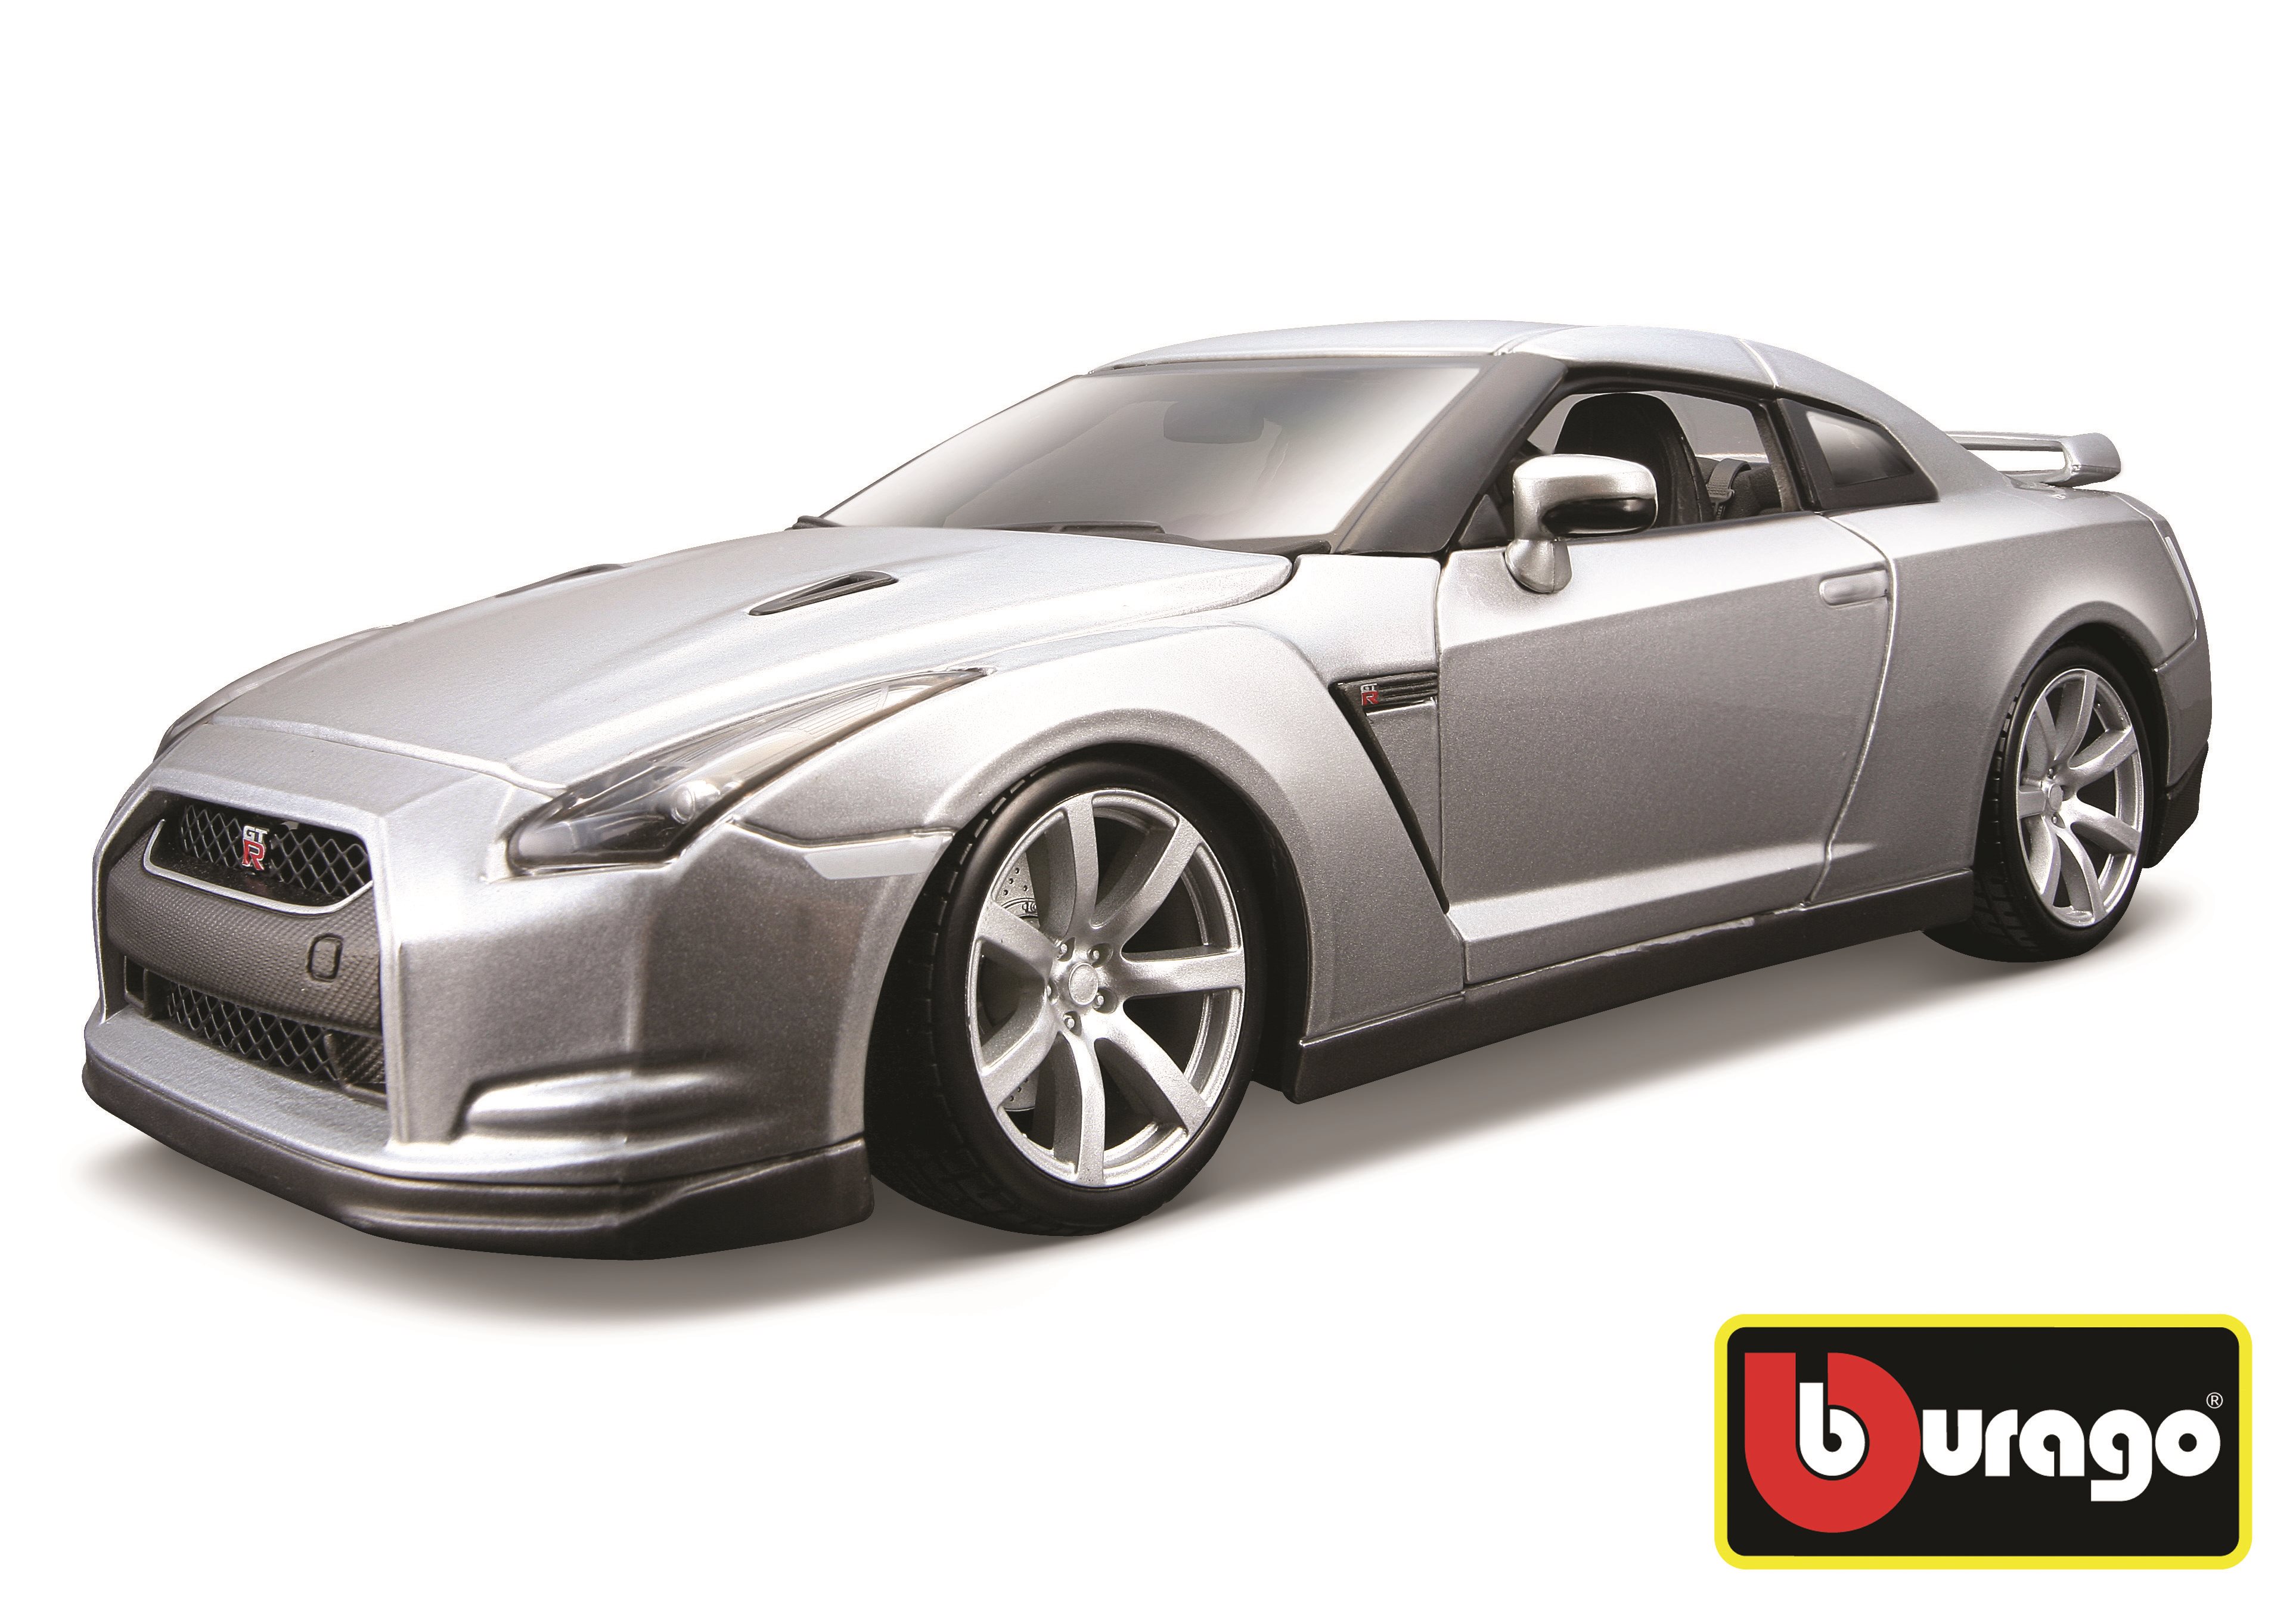 Bburago 2009 Nissan GT-R Metallic Silver